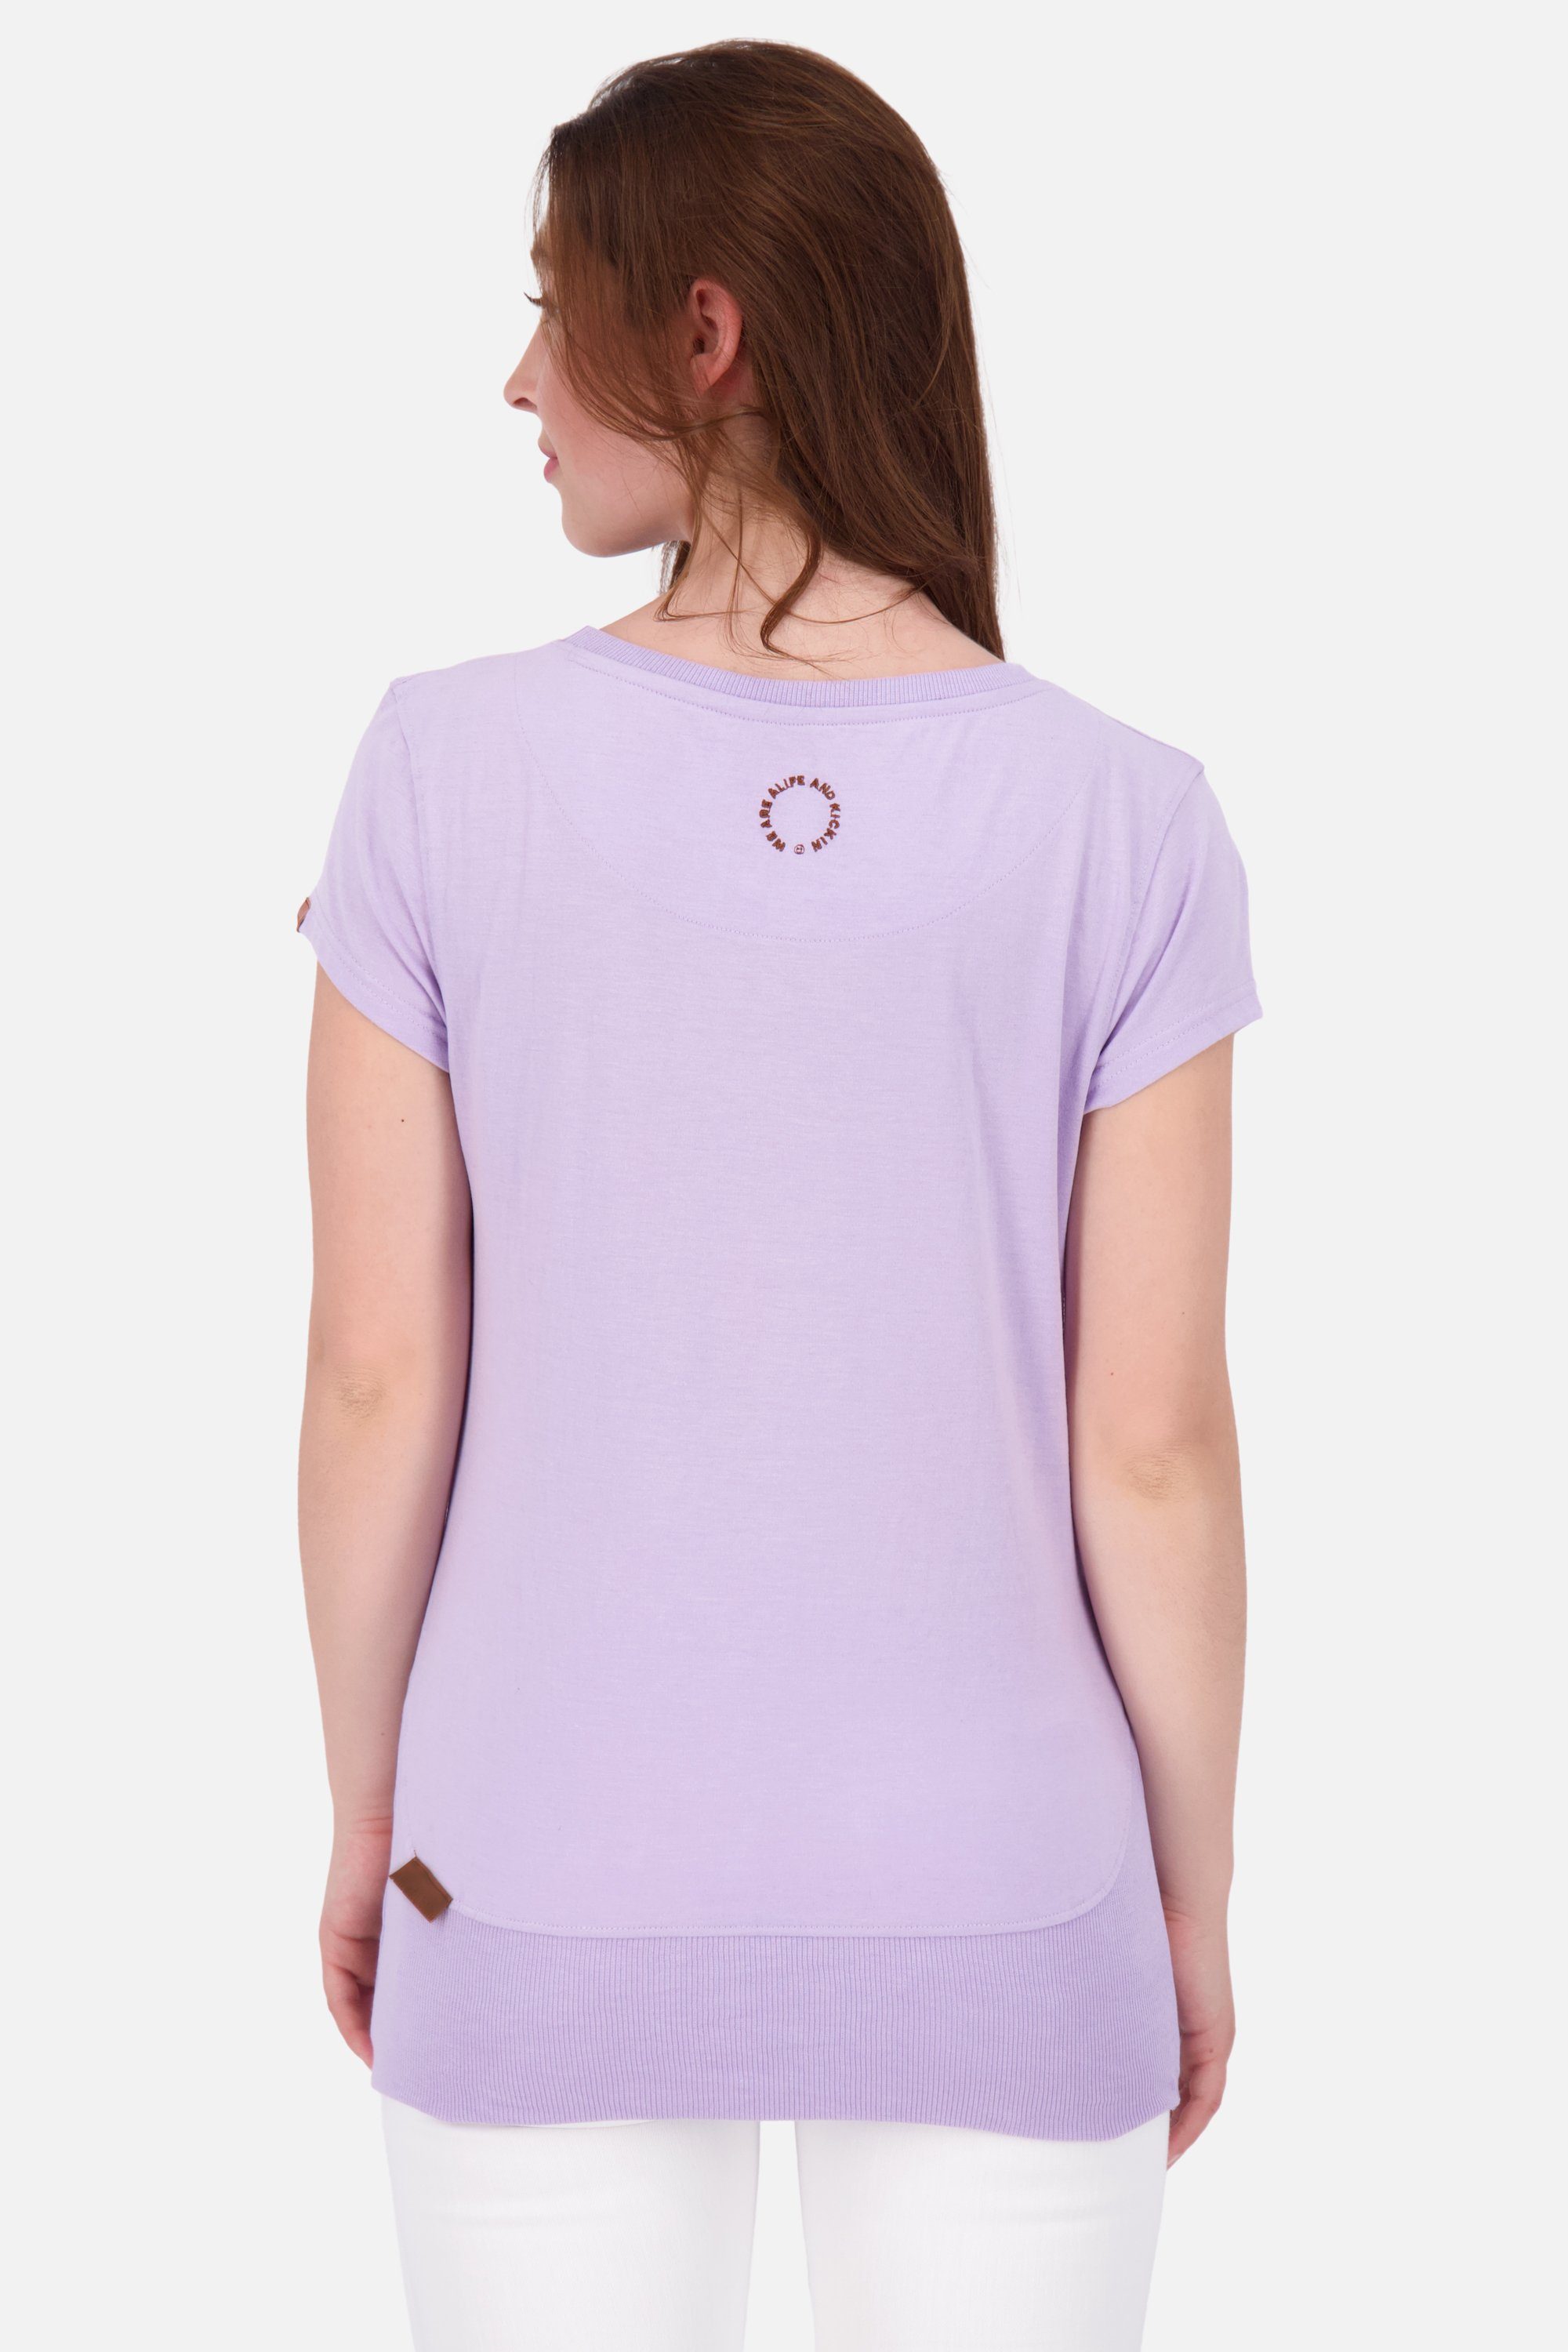 Alife & Damen digital melange Kurzarmshirt, Shirt Rundhalsshirt lavender A CocoAK Kickin Shirt